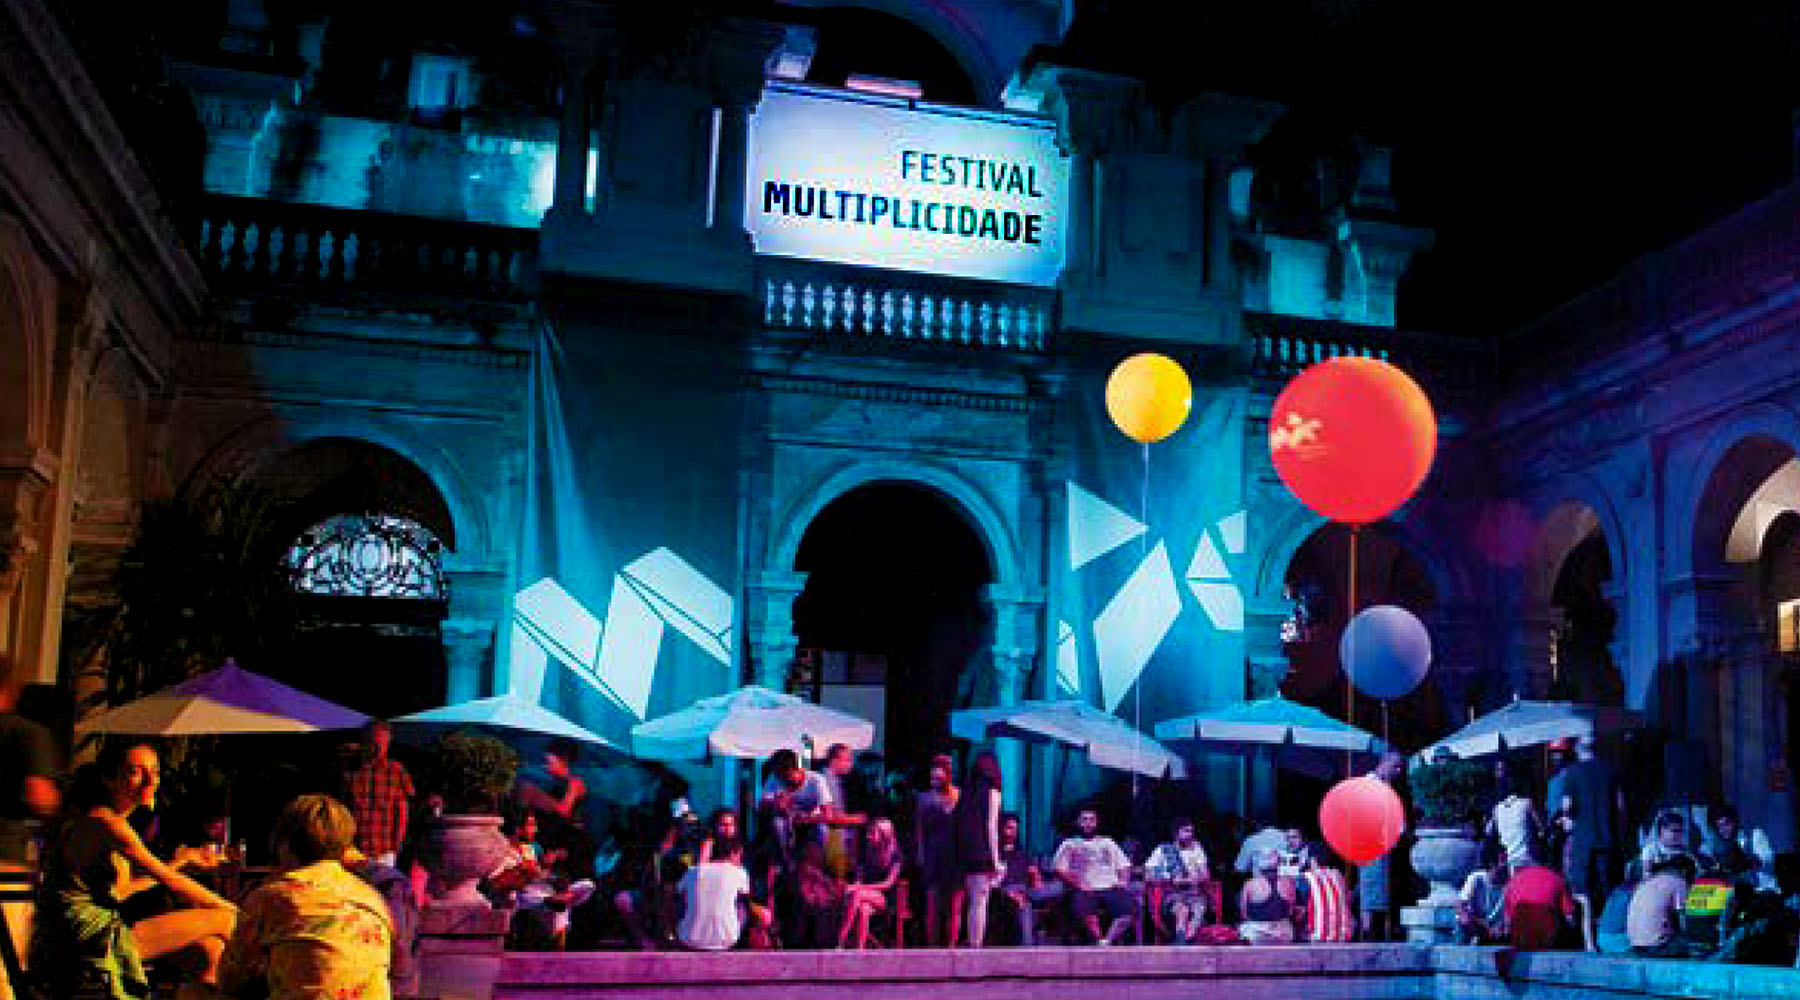 Livro Festival Multiplicidade_10 anos by Festival Multiplicidade - Issuu